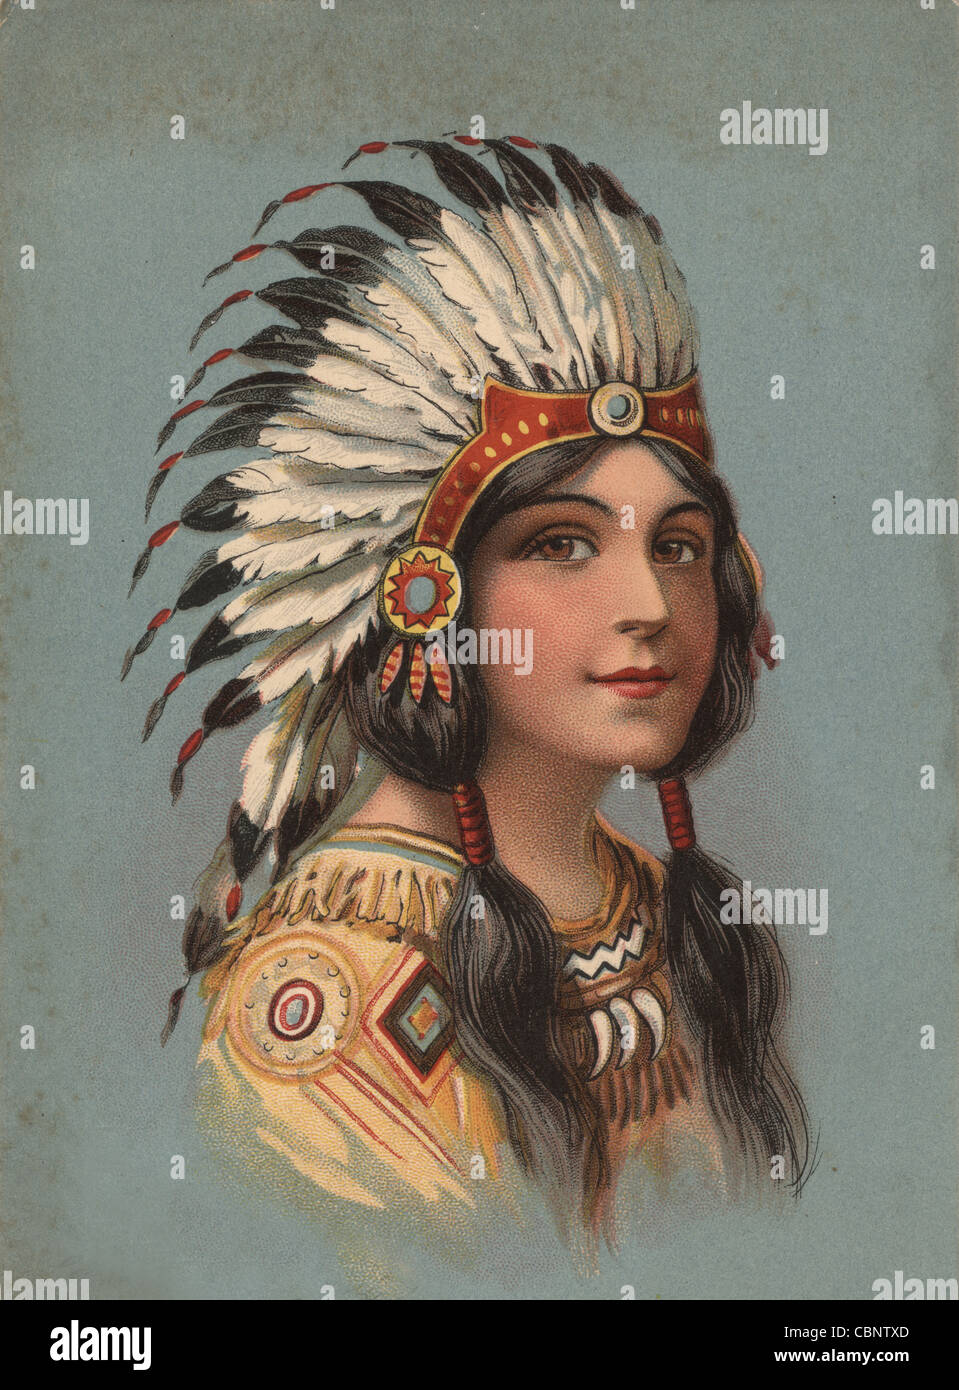 Native American Indian Beauty Stock Photo